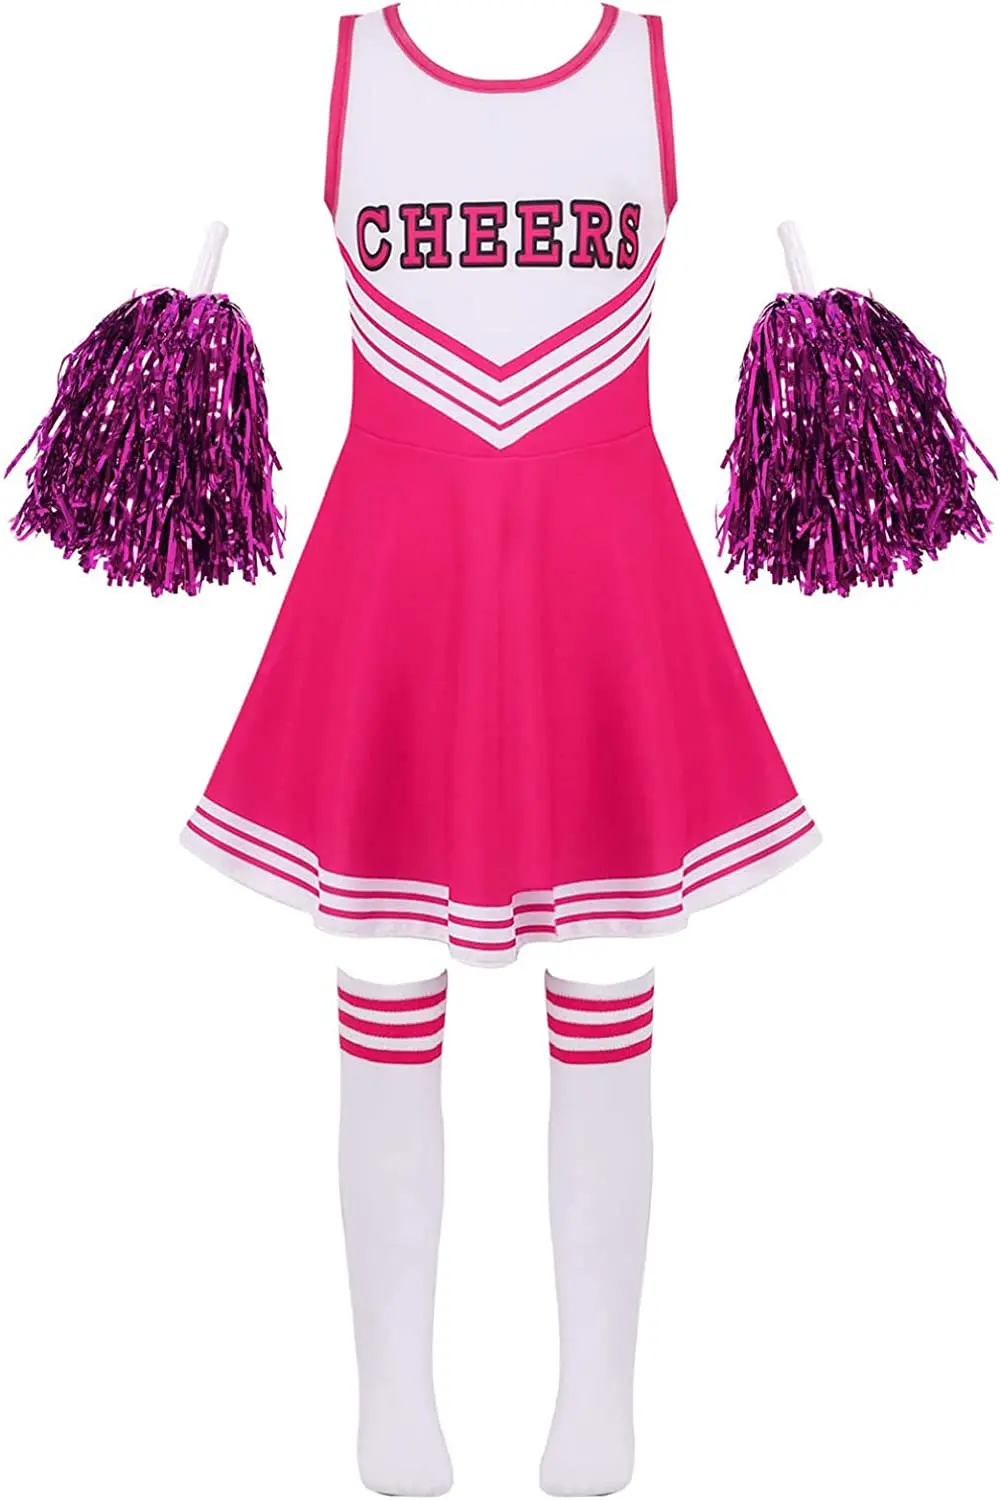 ragazze-cheerleading-dance-dress-cheer-leader-outfit-uniforme-halloween-cosplay-costume-completo-con-pompon-e-calzino